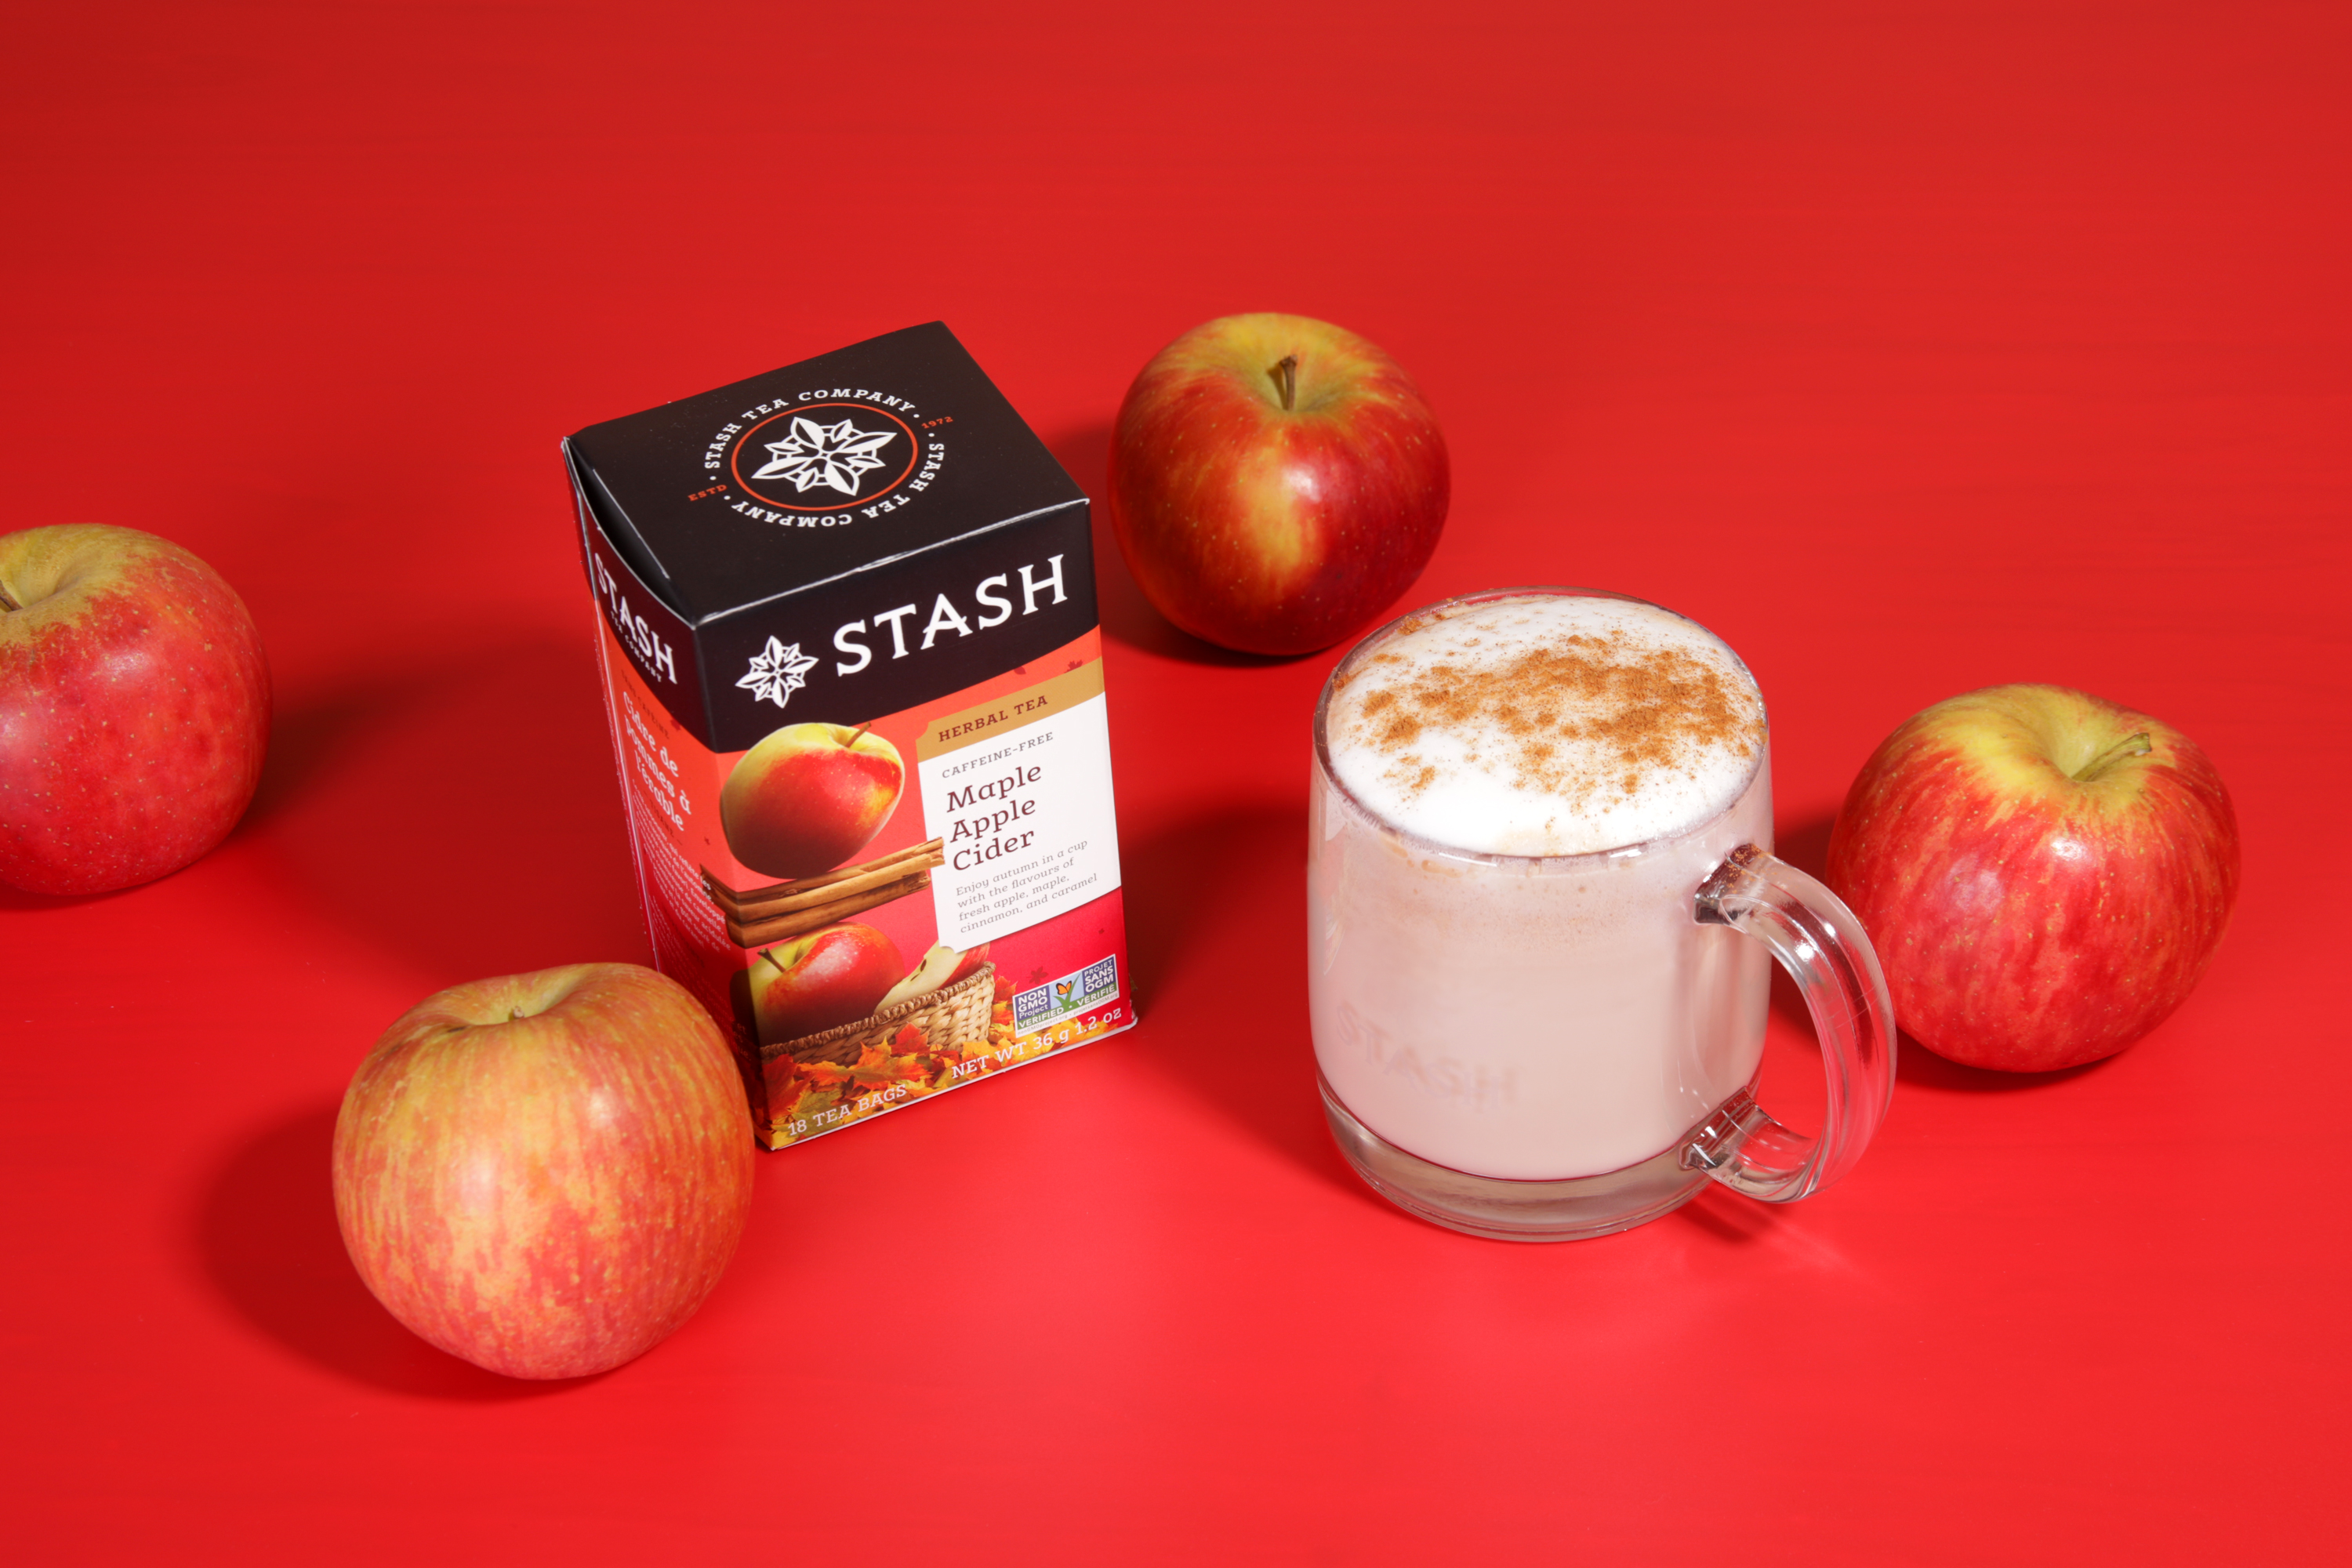 Have a taste of Autumn with this tea-rrific Stash Tea recipe for Maple Apple Cider.